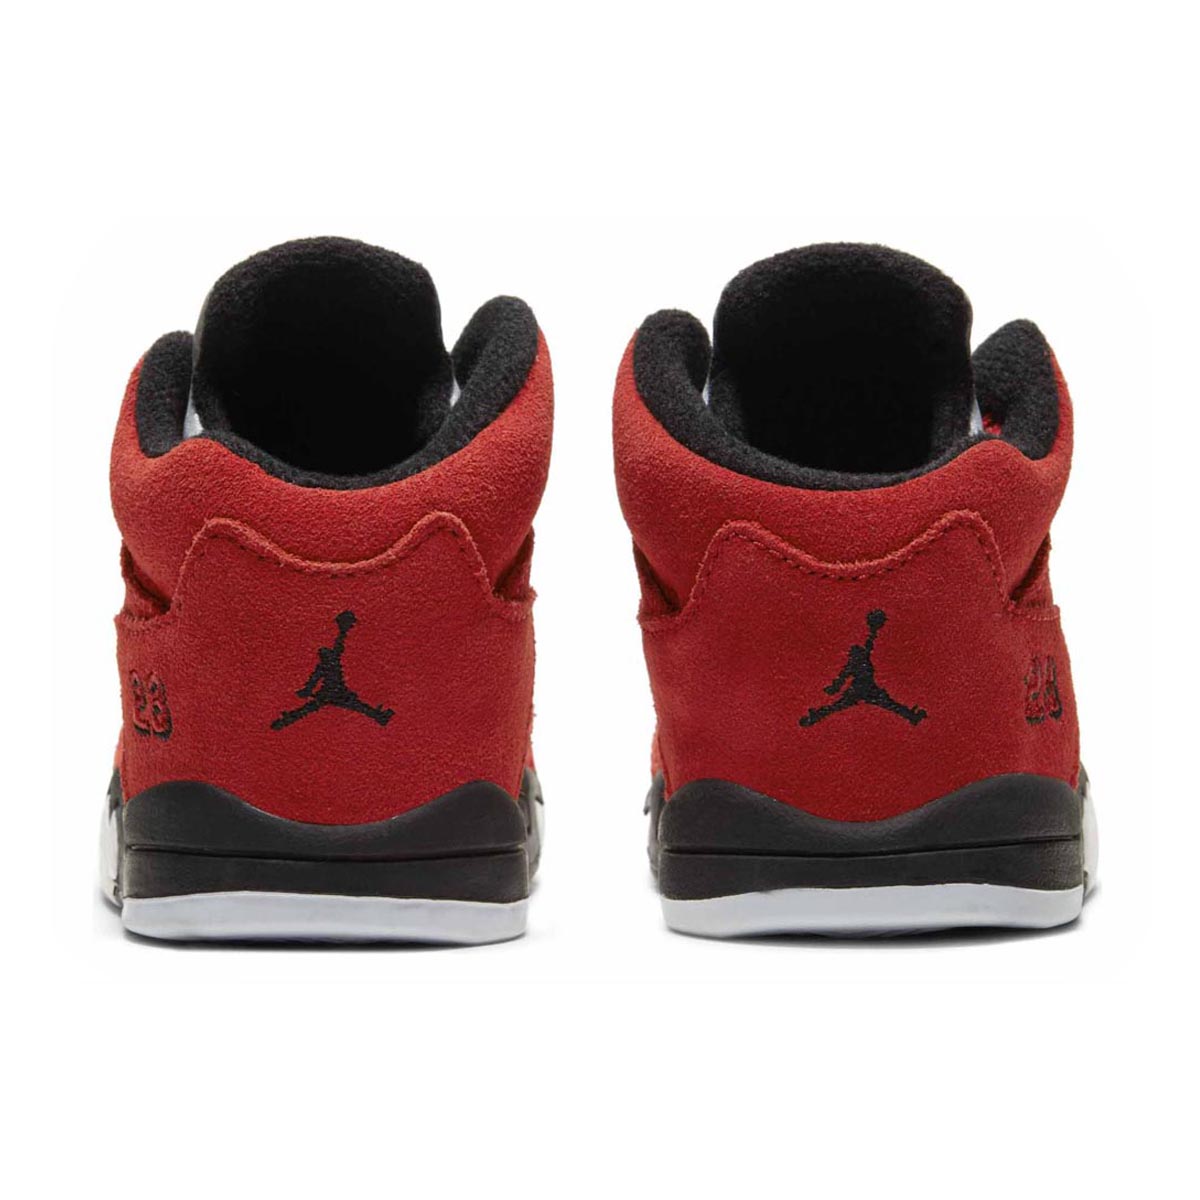 Jordan 5 Retro Infant/Toddler Shoe